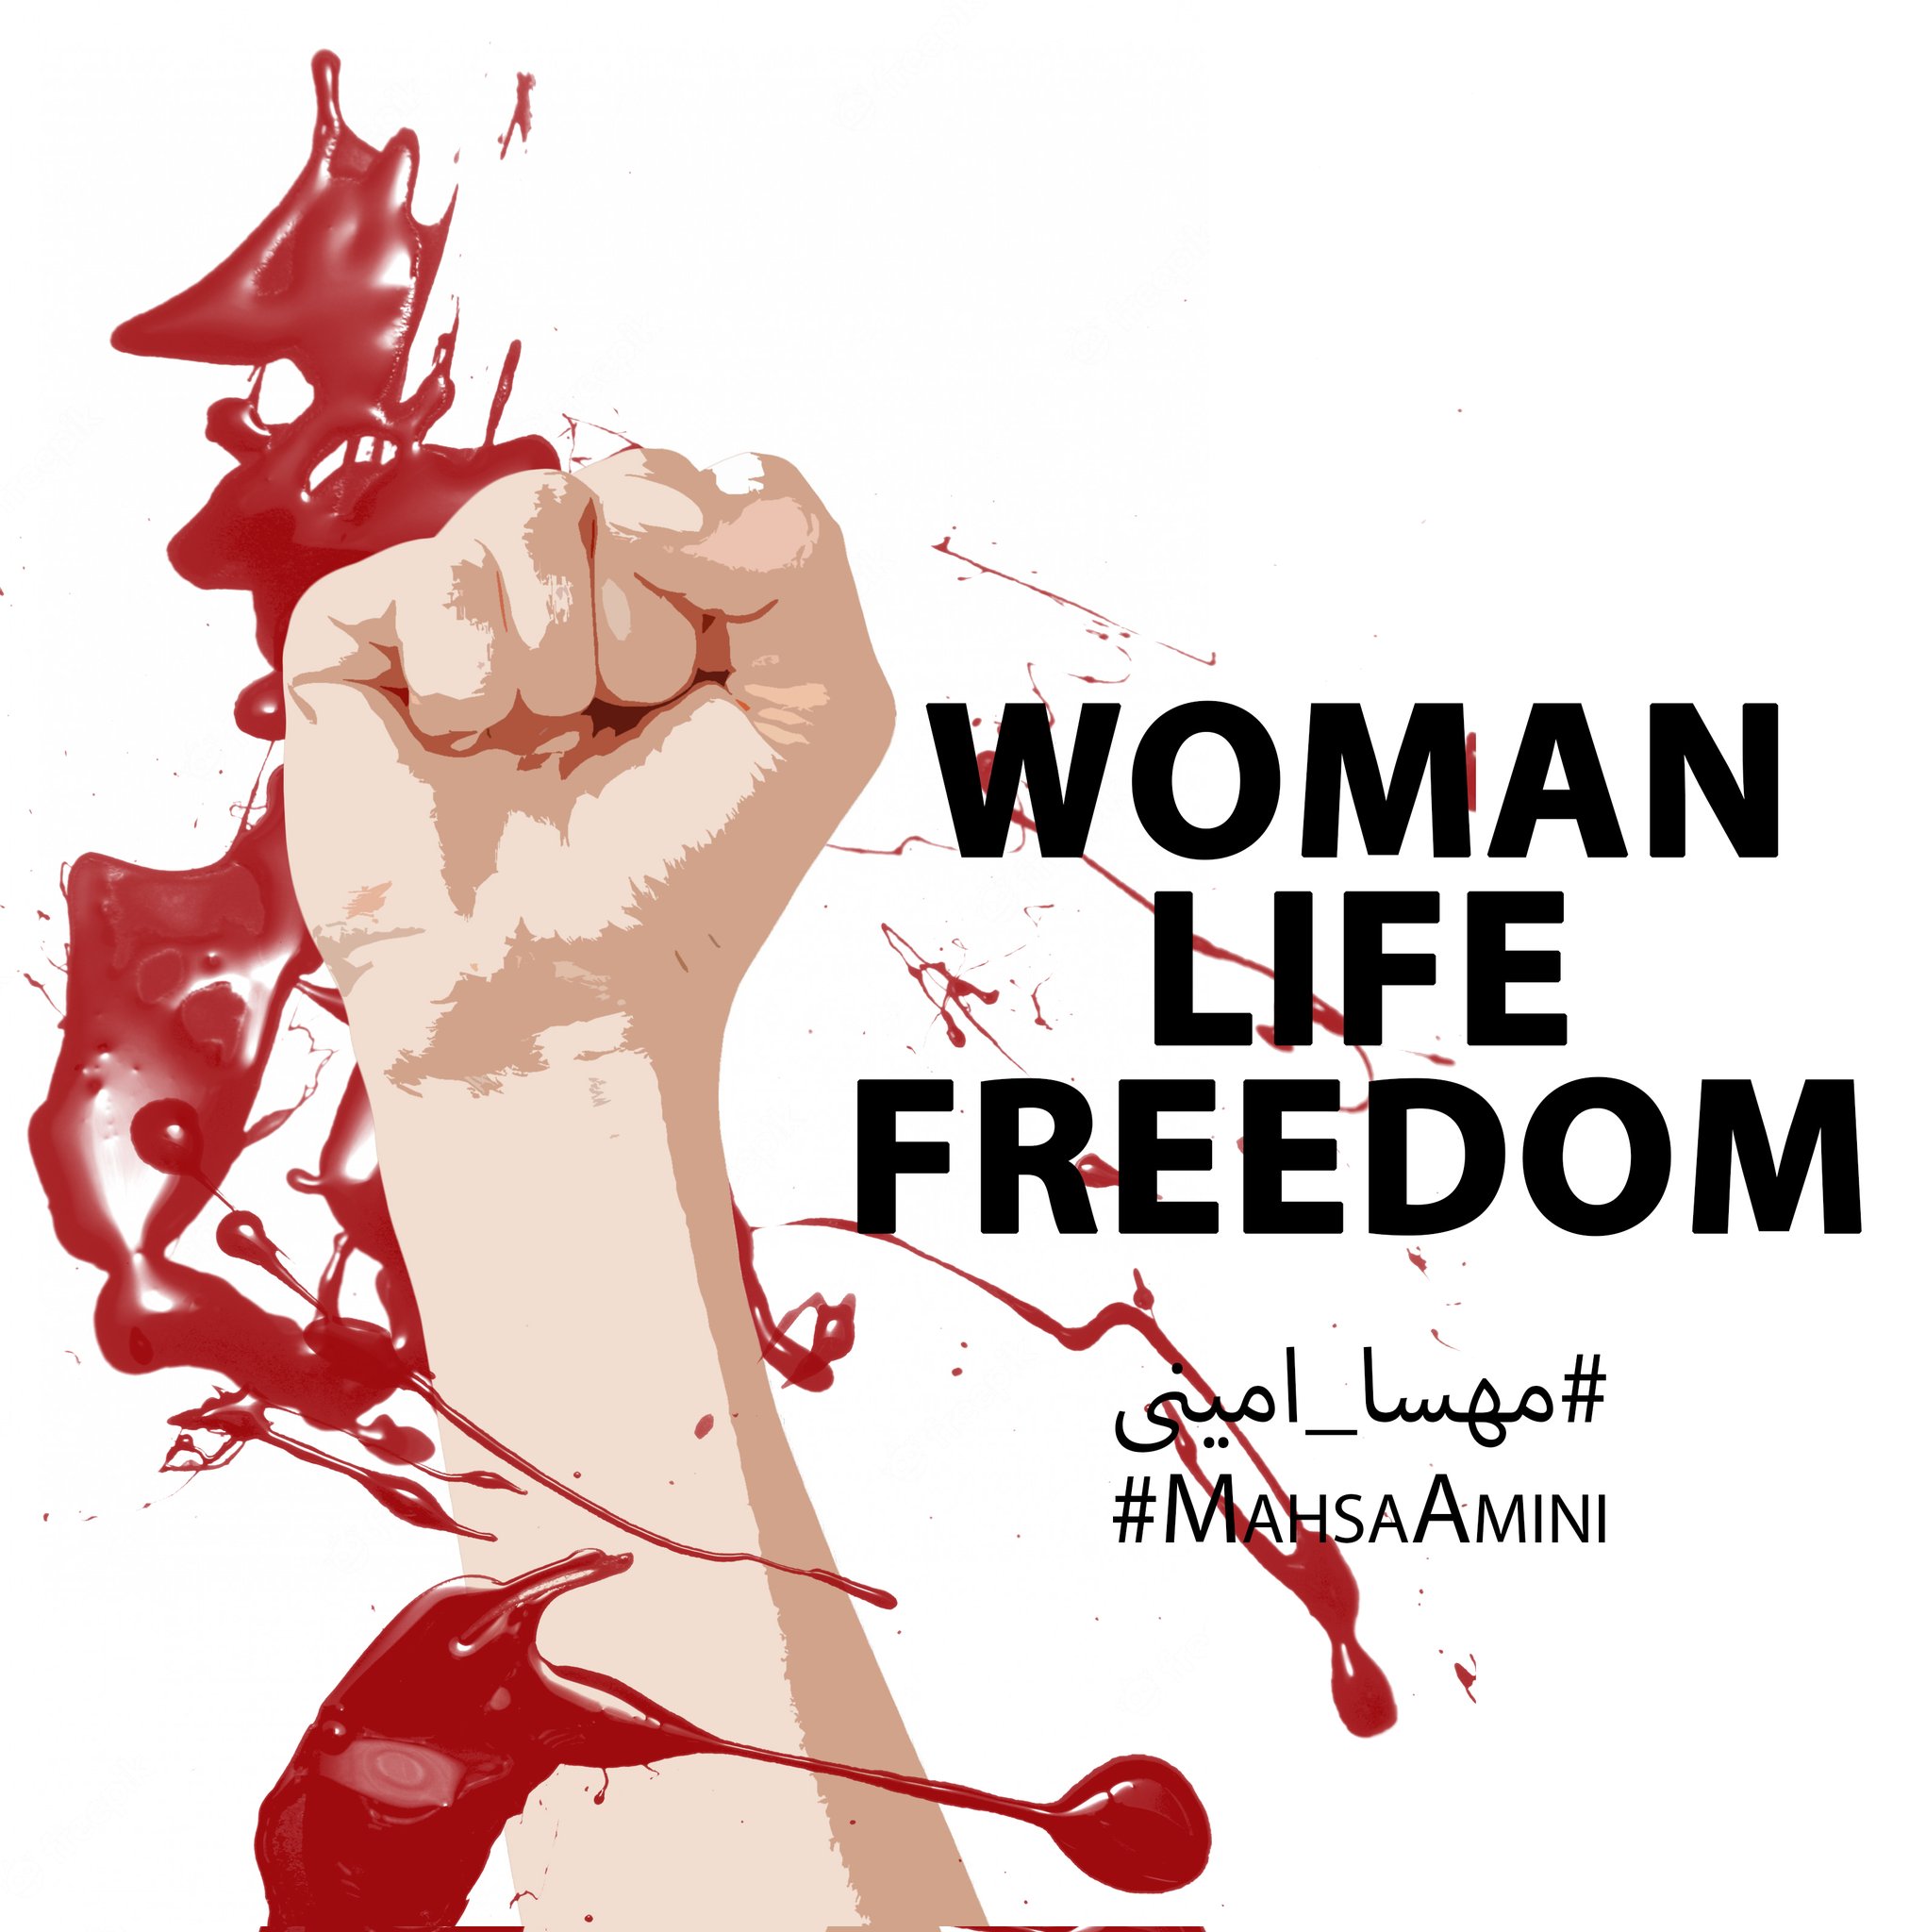 Women LIfe Freedom #MahsaAmini